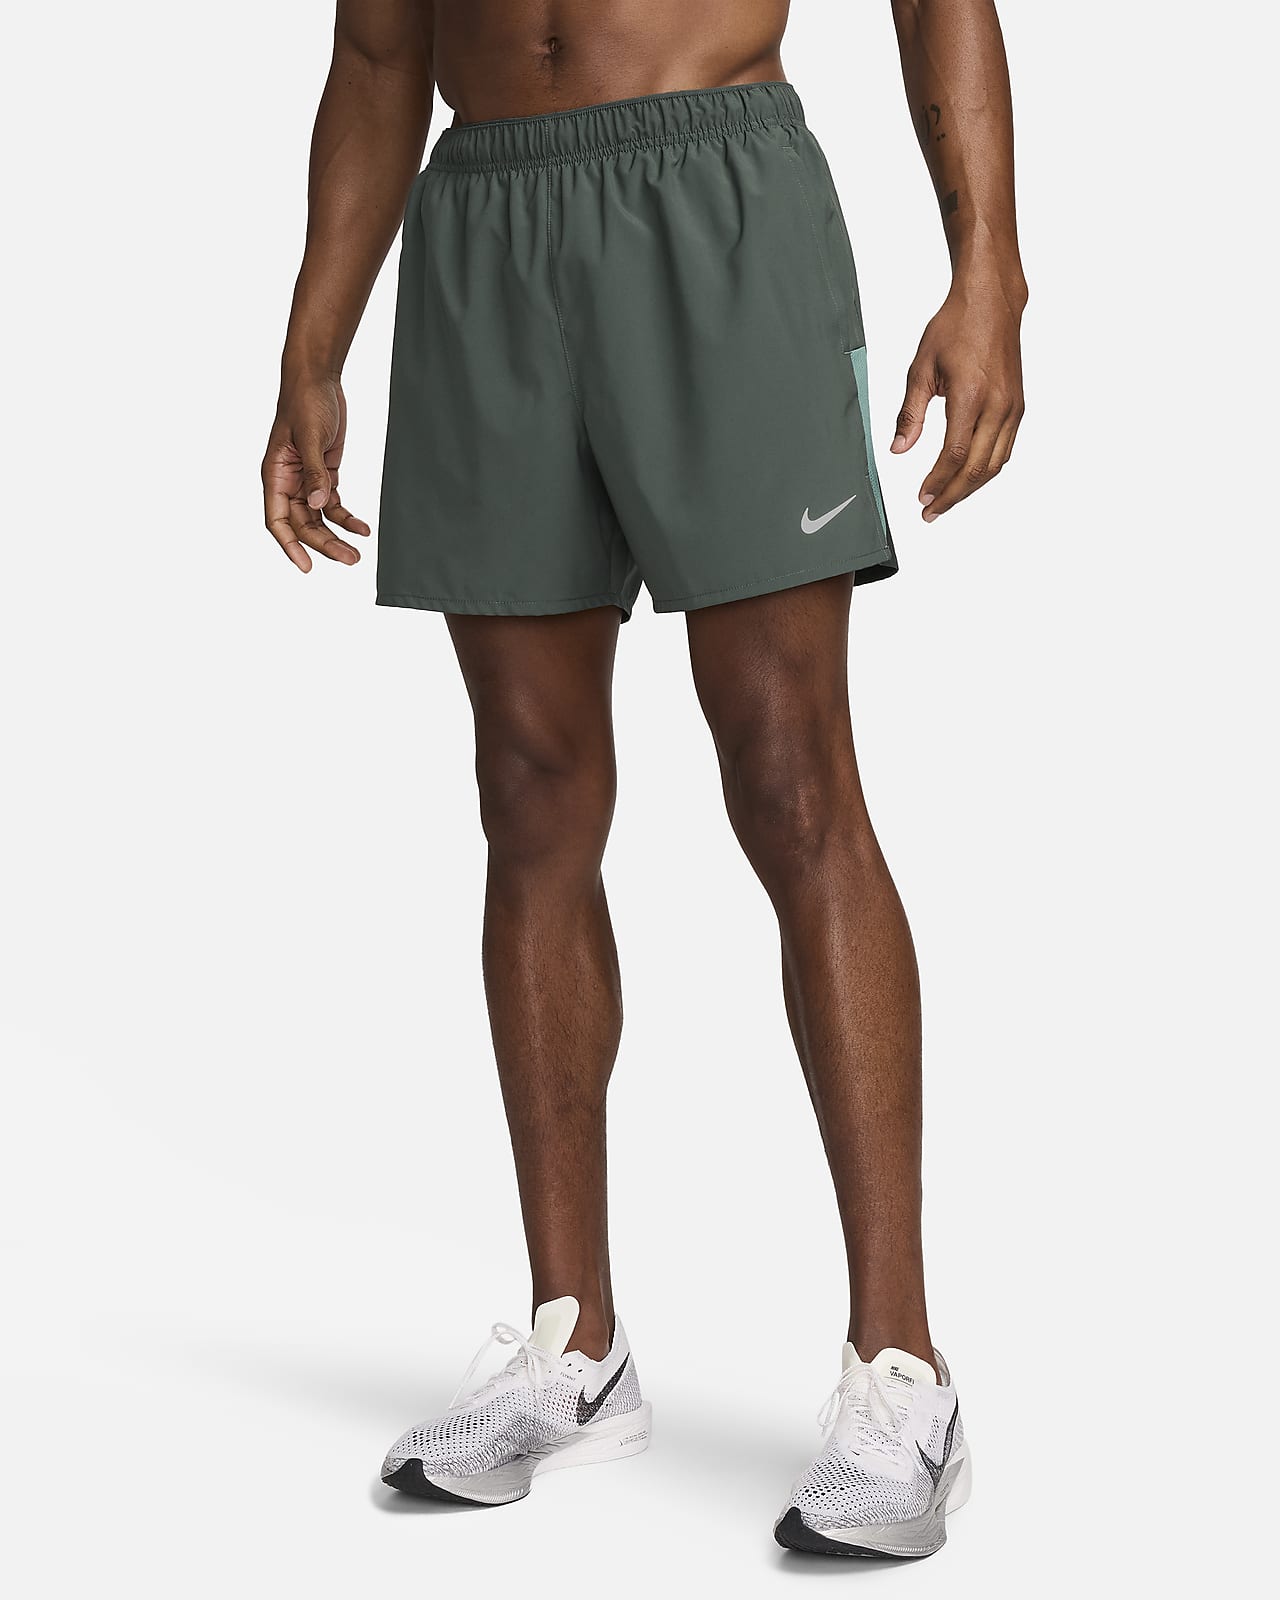 Nike Challenger Pantalons curts Dri-FIT amb eslip incorporat de 13 cm de running - Home